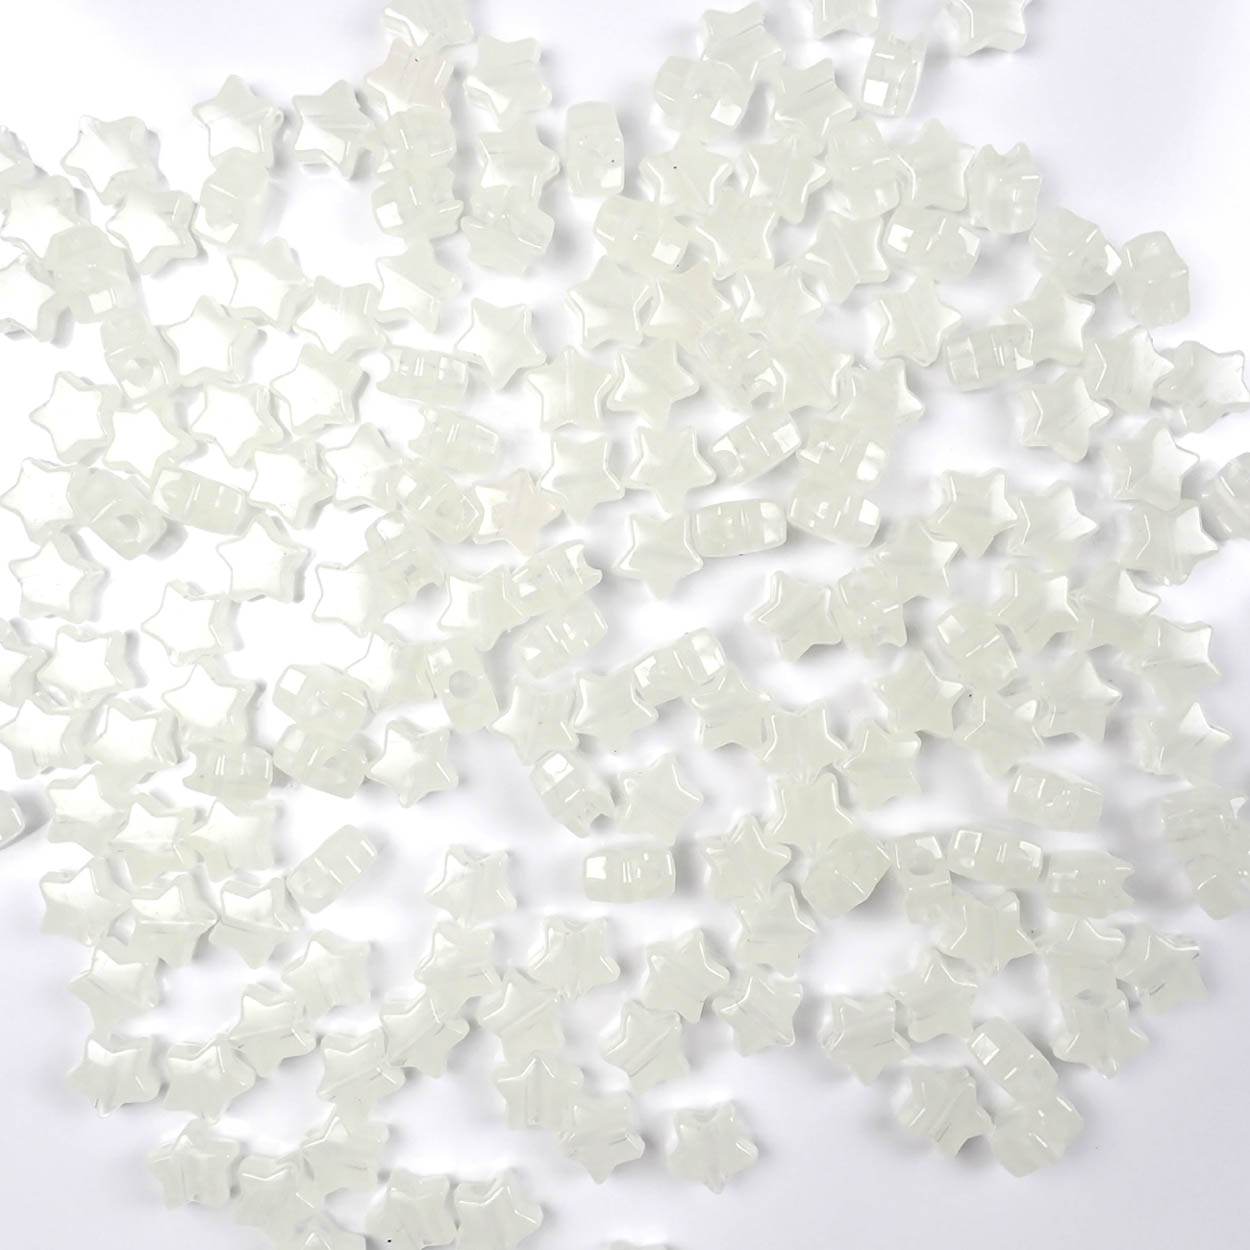 Star Plastic Pony Beads, 13mm, White Glow, 125 beads